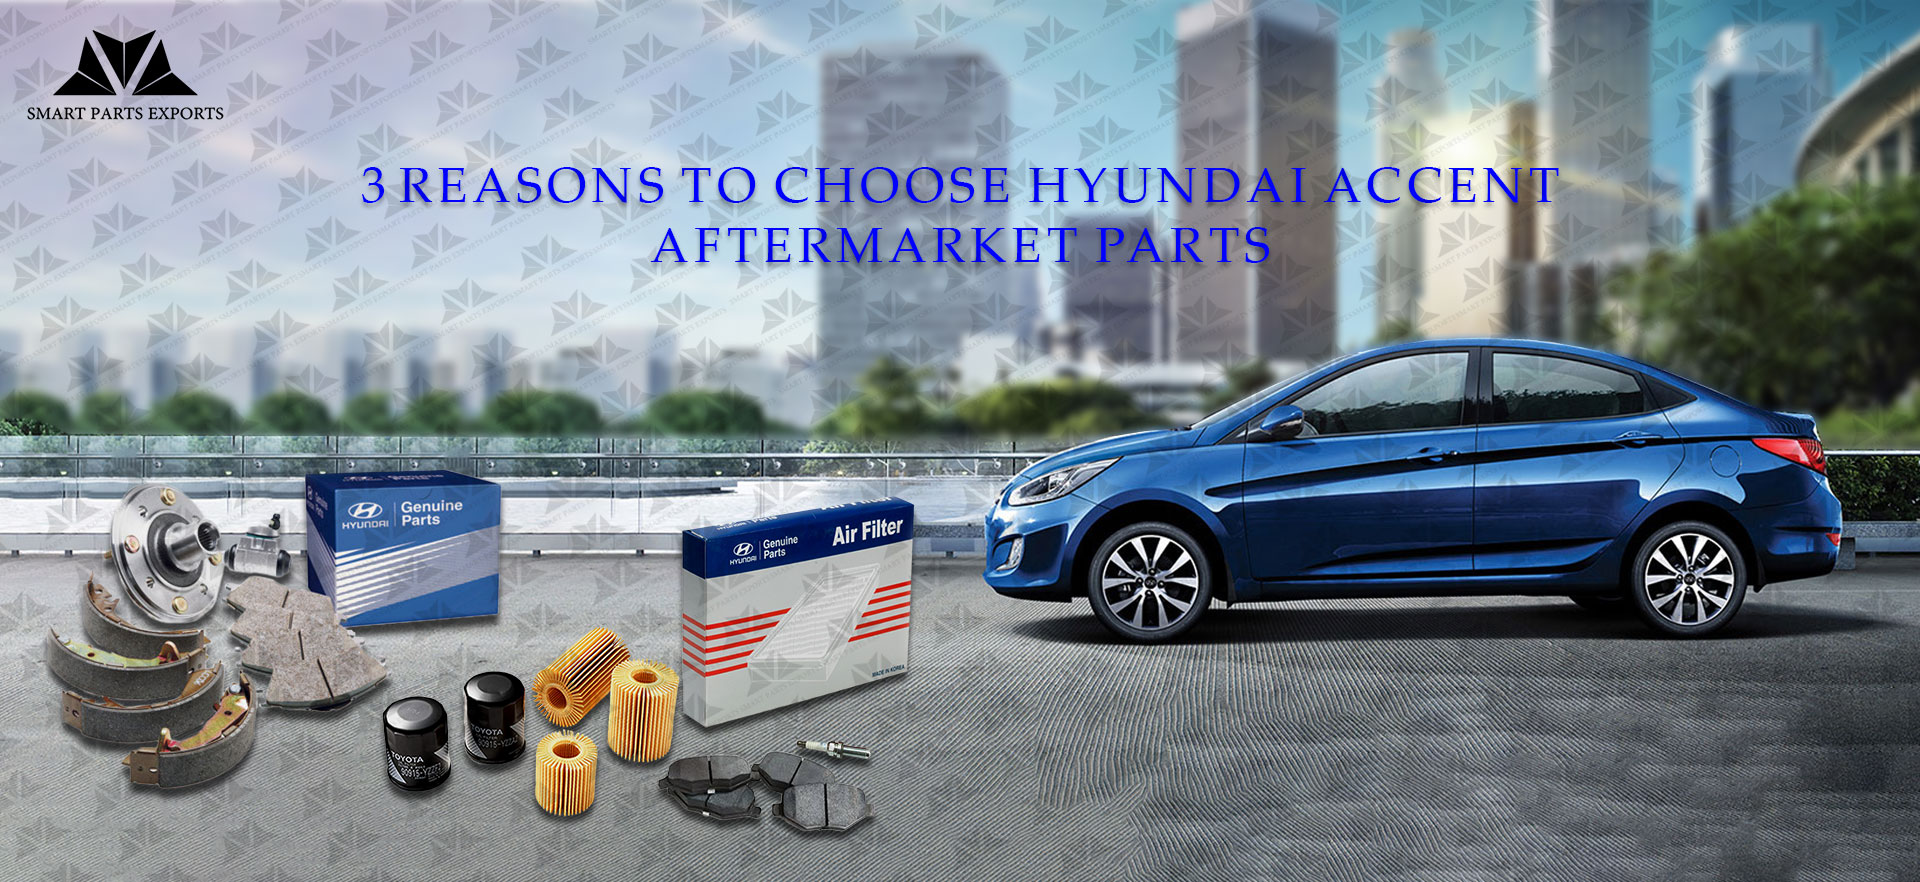 3 Reasons to Choose Hyundai Accent Aftermarket Parts